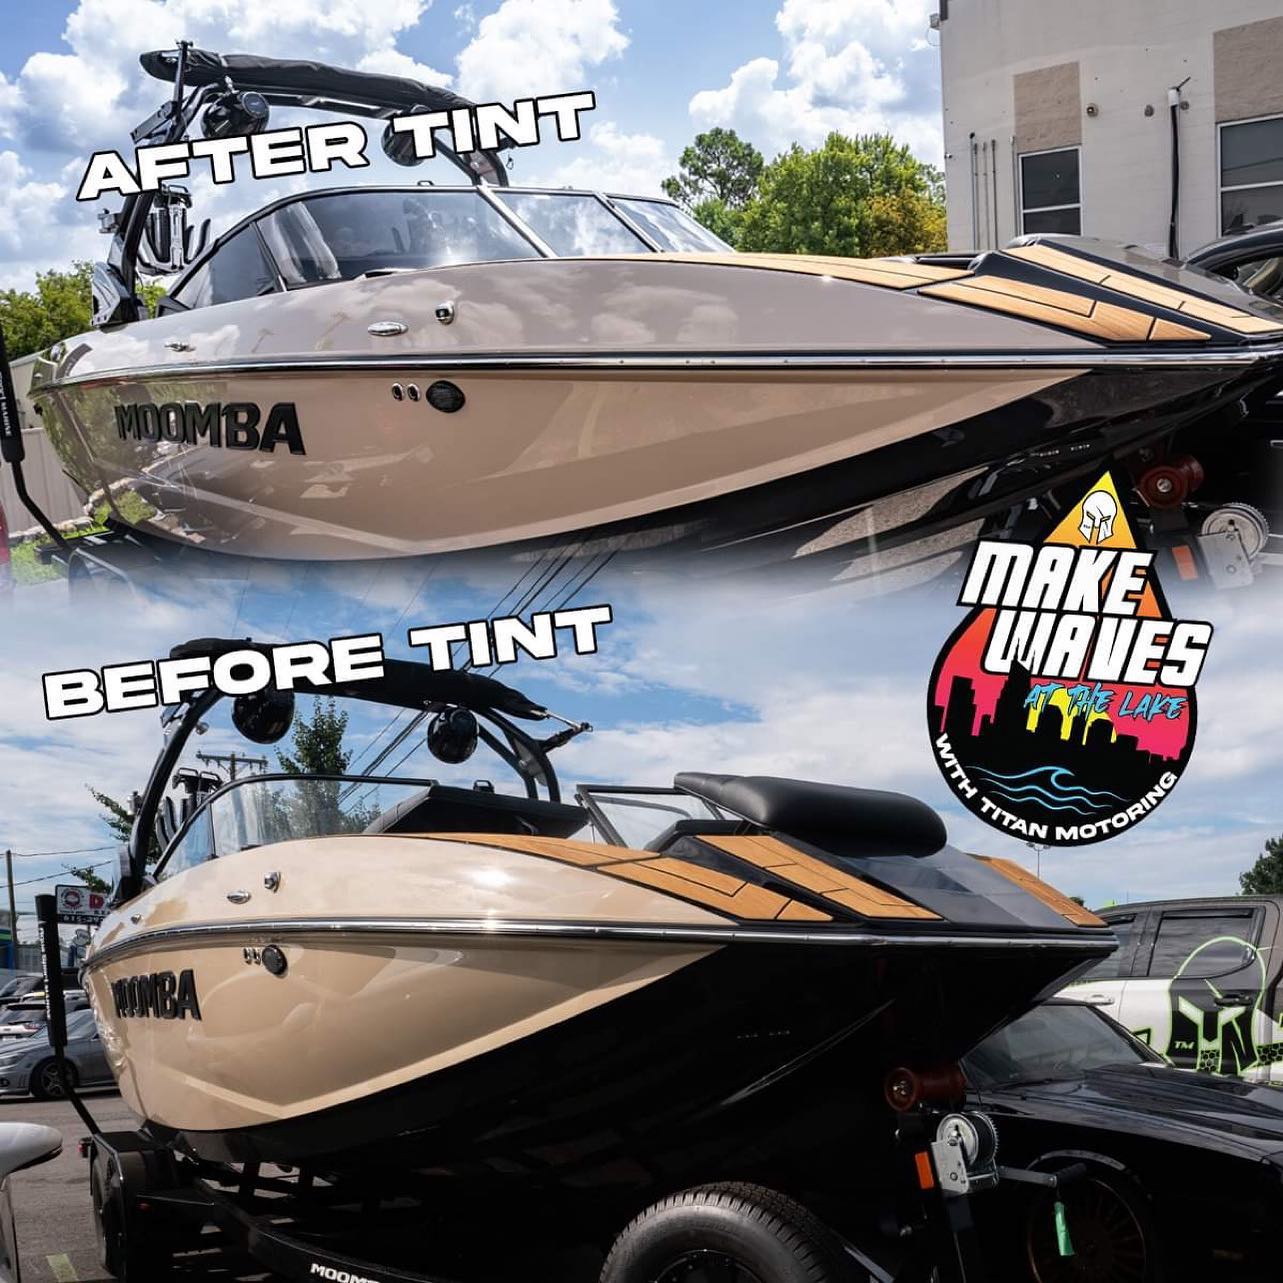 Carbon 5% Windshield tint on this @moombaboats 

#boattint #moomba #moombaboats #titanboating #wakeboarding #titanmotoring #makewaves #welcometothegaggle